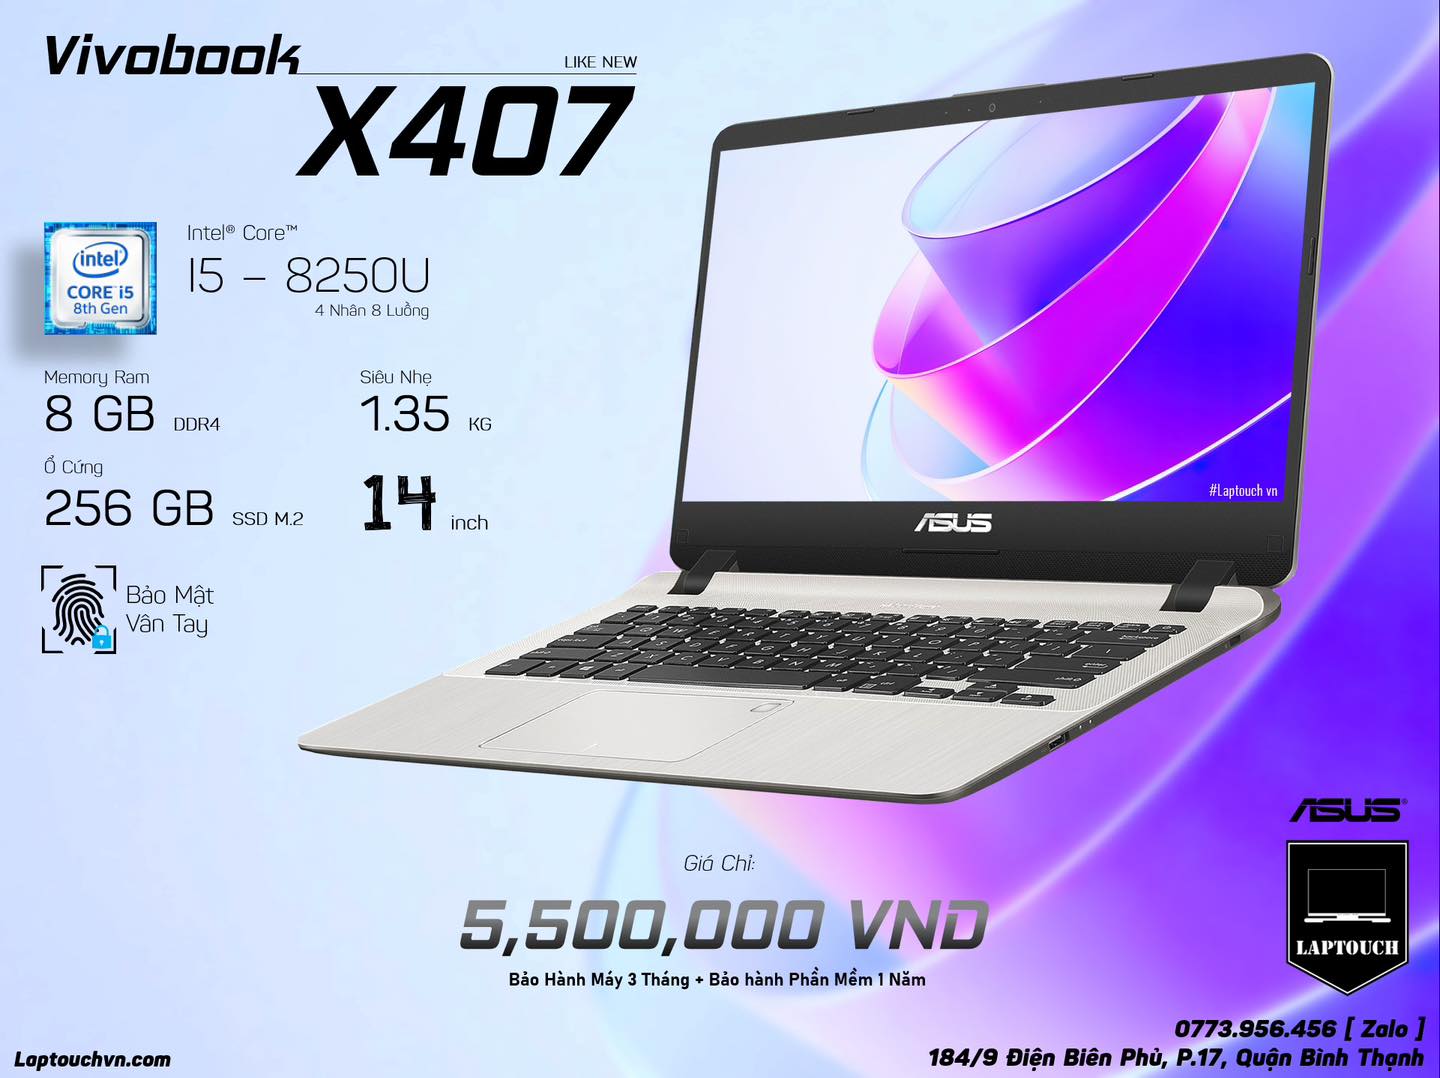 Asus Vivobook X407 [ Like New ]